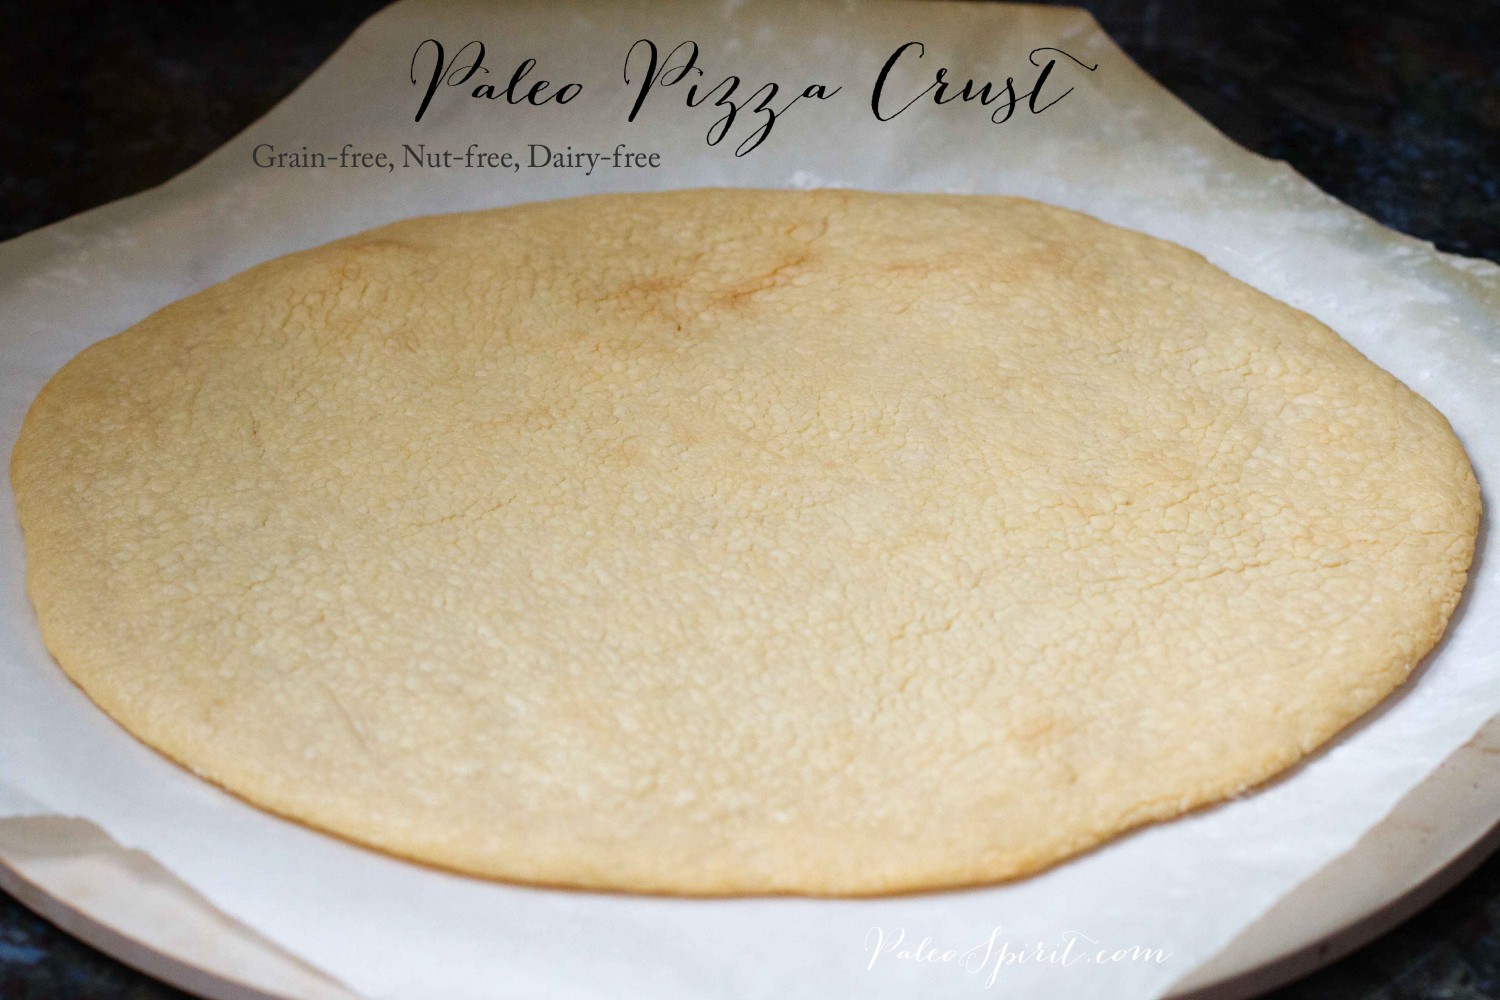 Paleo Pizza Crust: from @PaleoSpirit #paleo #dairyfree